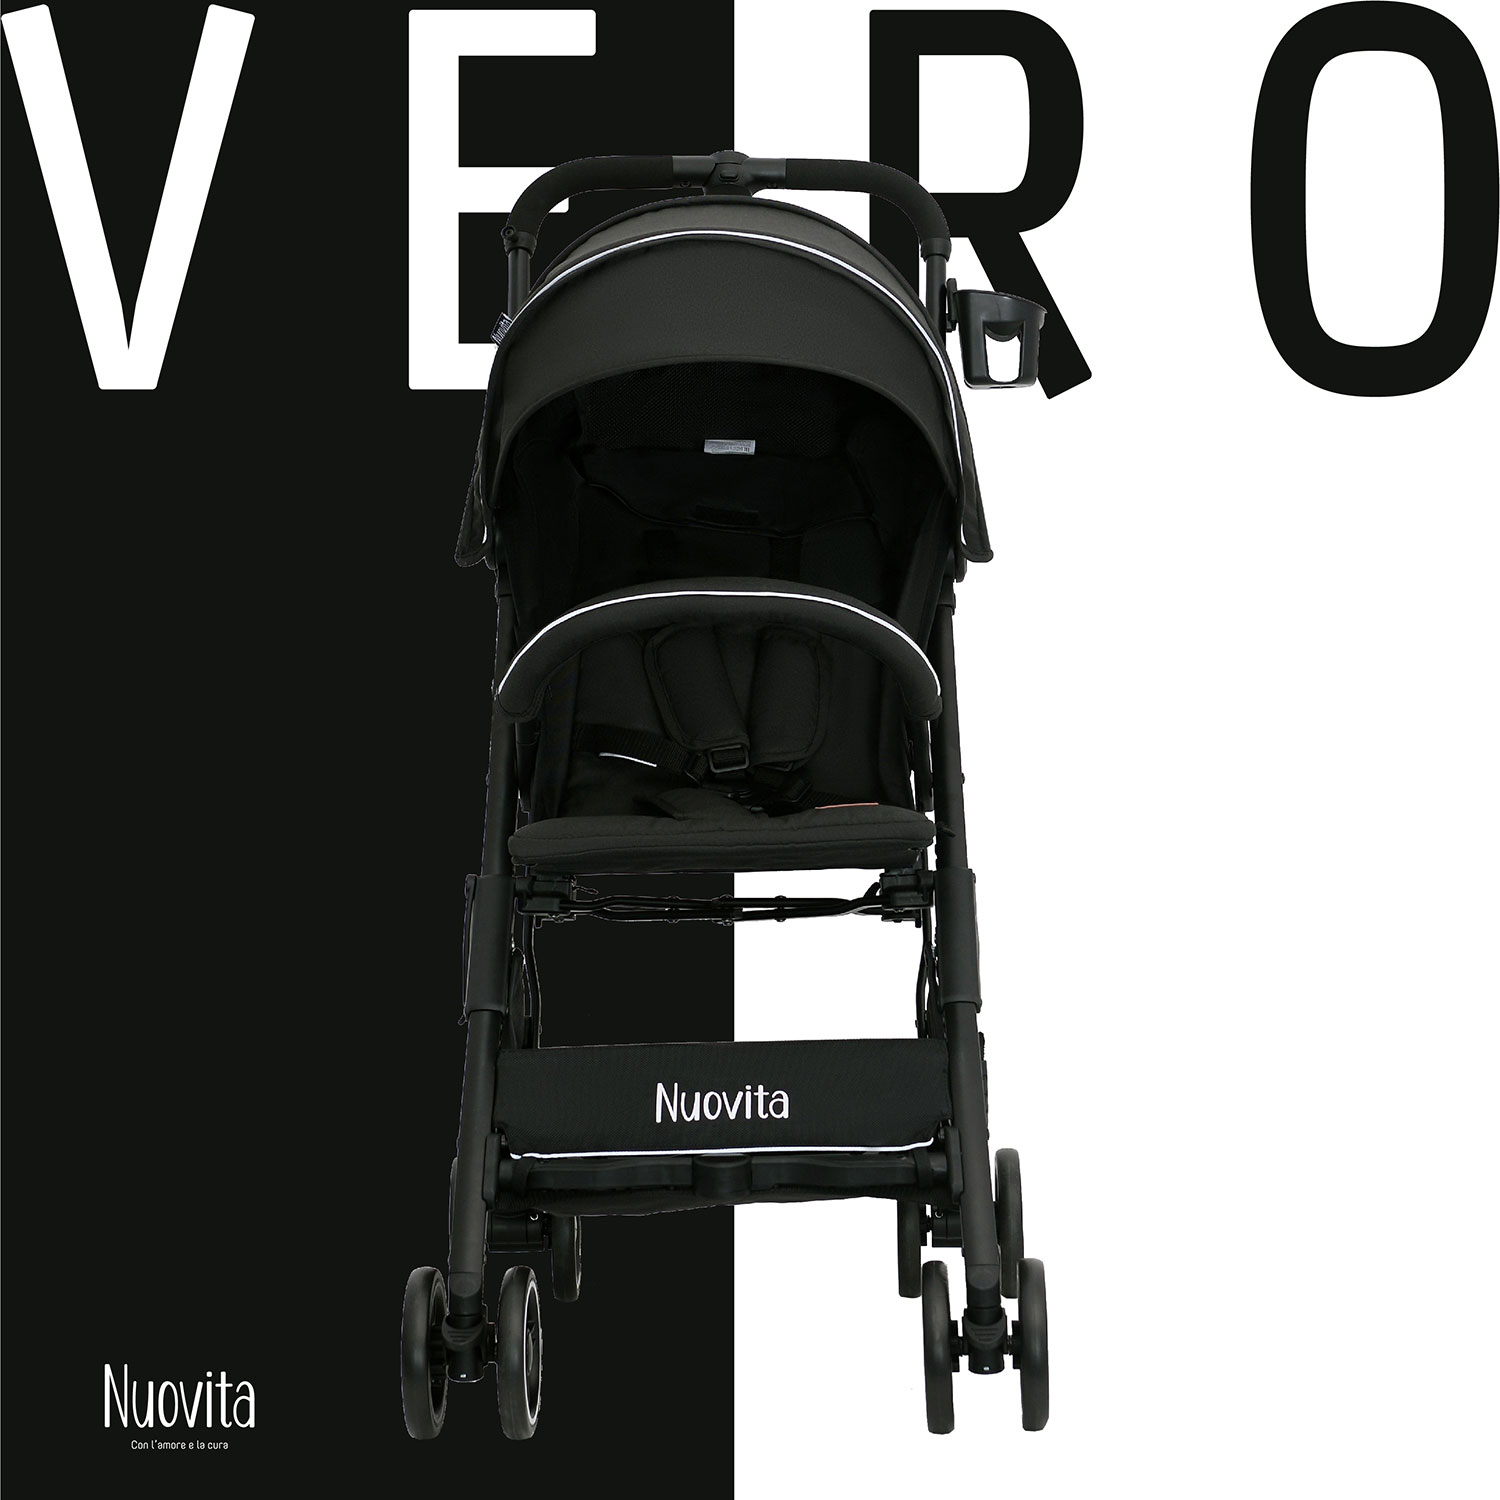 Прогулочная коляска Nuovita Vero Nero Черный прогулочная коляска nuovita fiato turchese nero бирюзовый